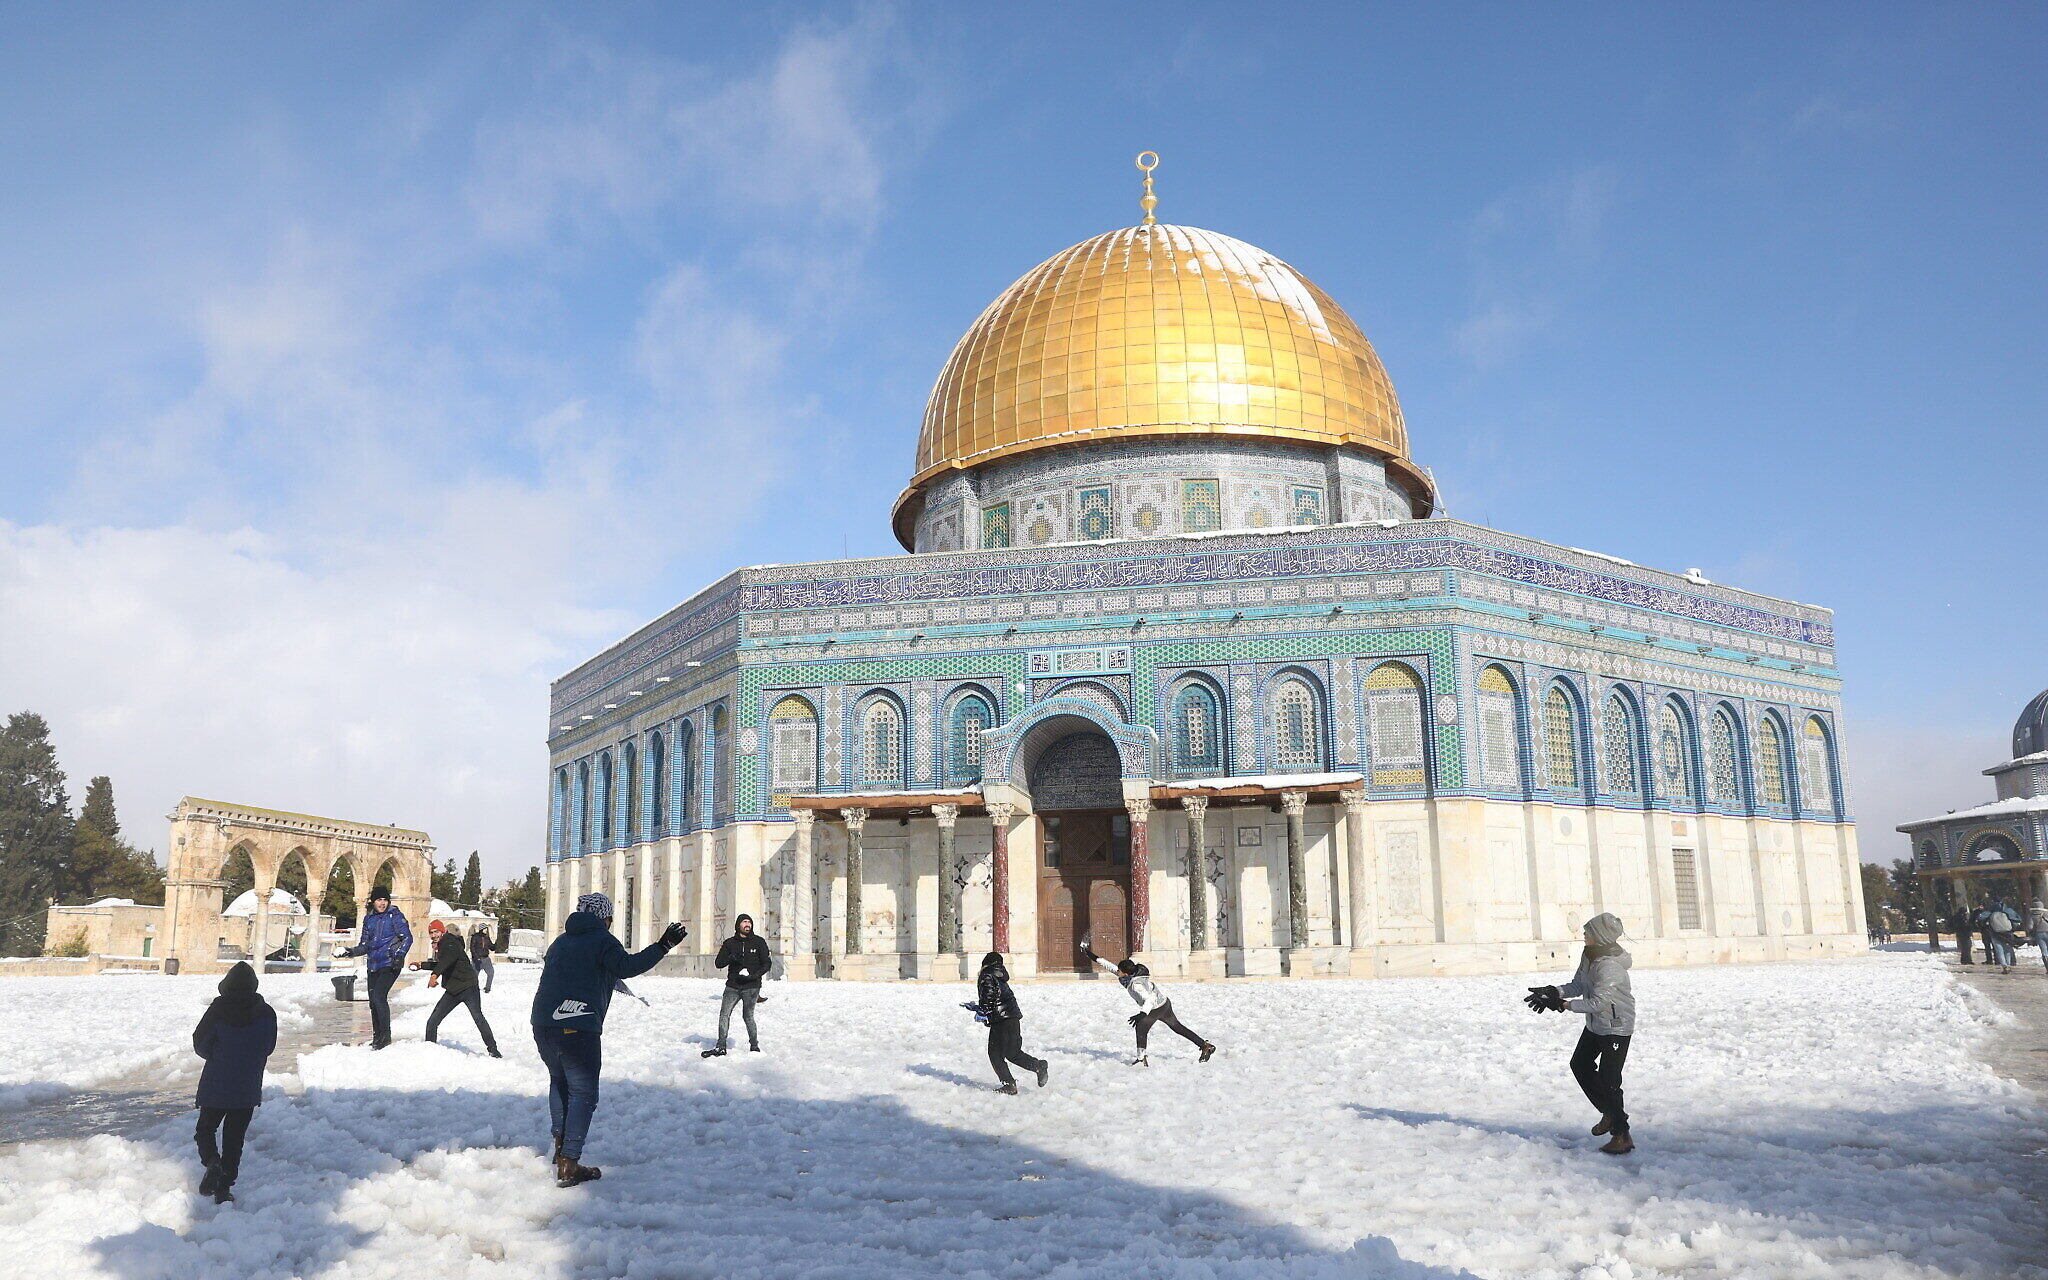 Snow blankets Jerusalem, transforming city into winter wonderland The